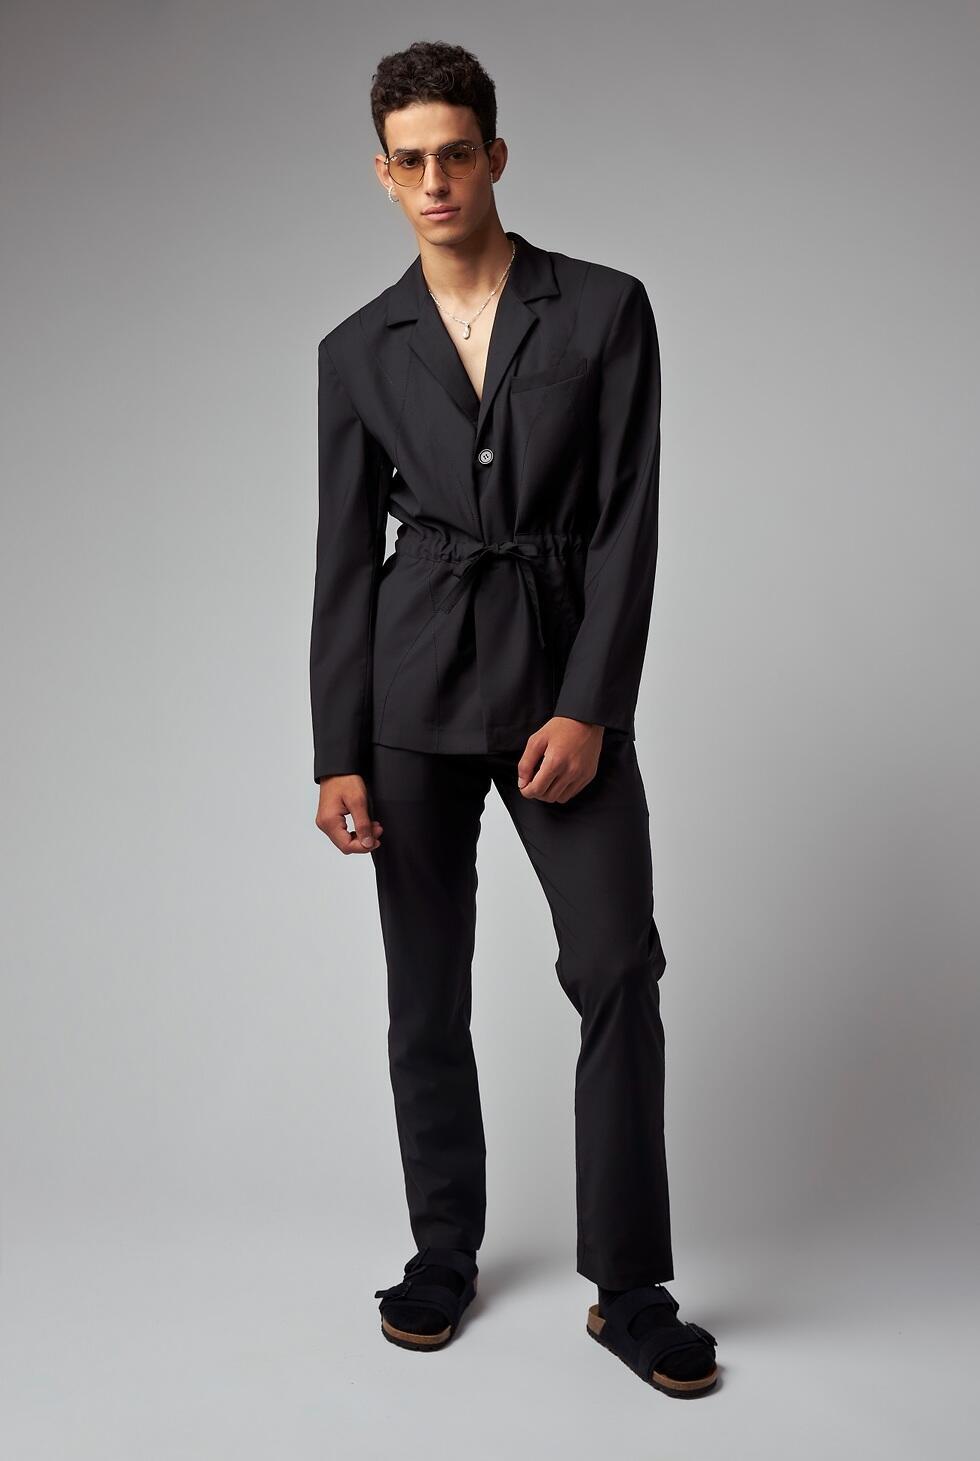  Highlight Studio חליפה עם מקטורן נקשר, 3,500 שקל, יאיר ביטון למותג 